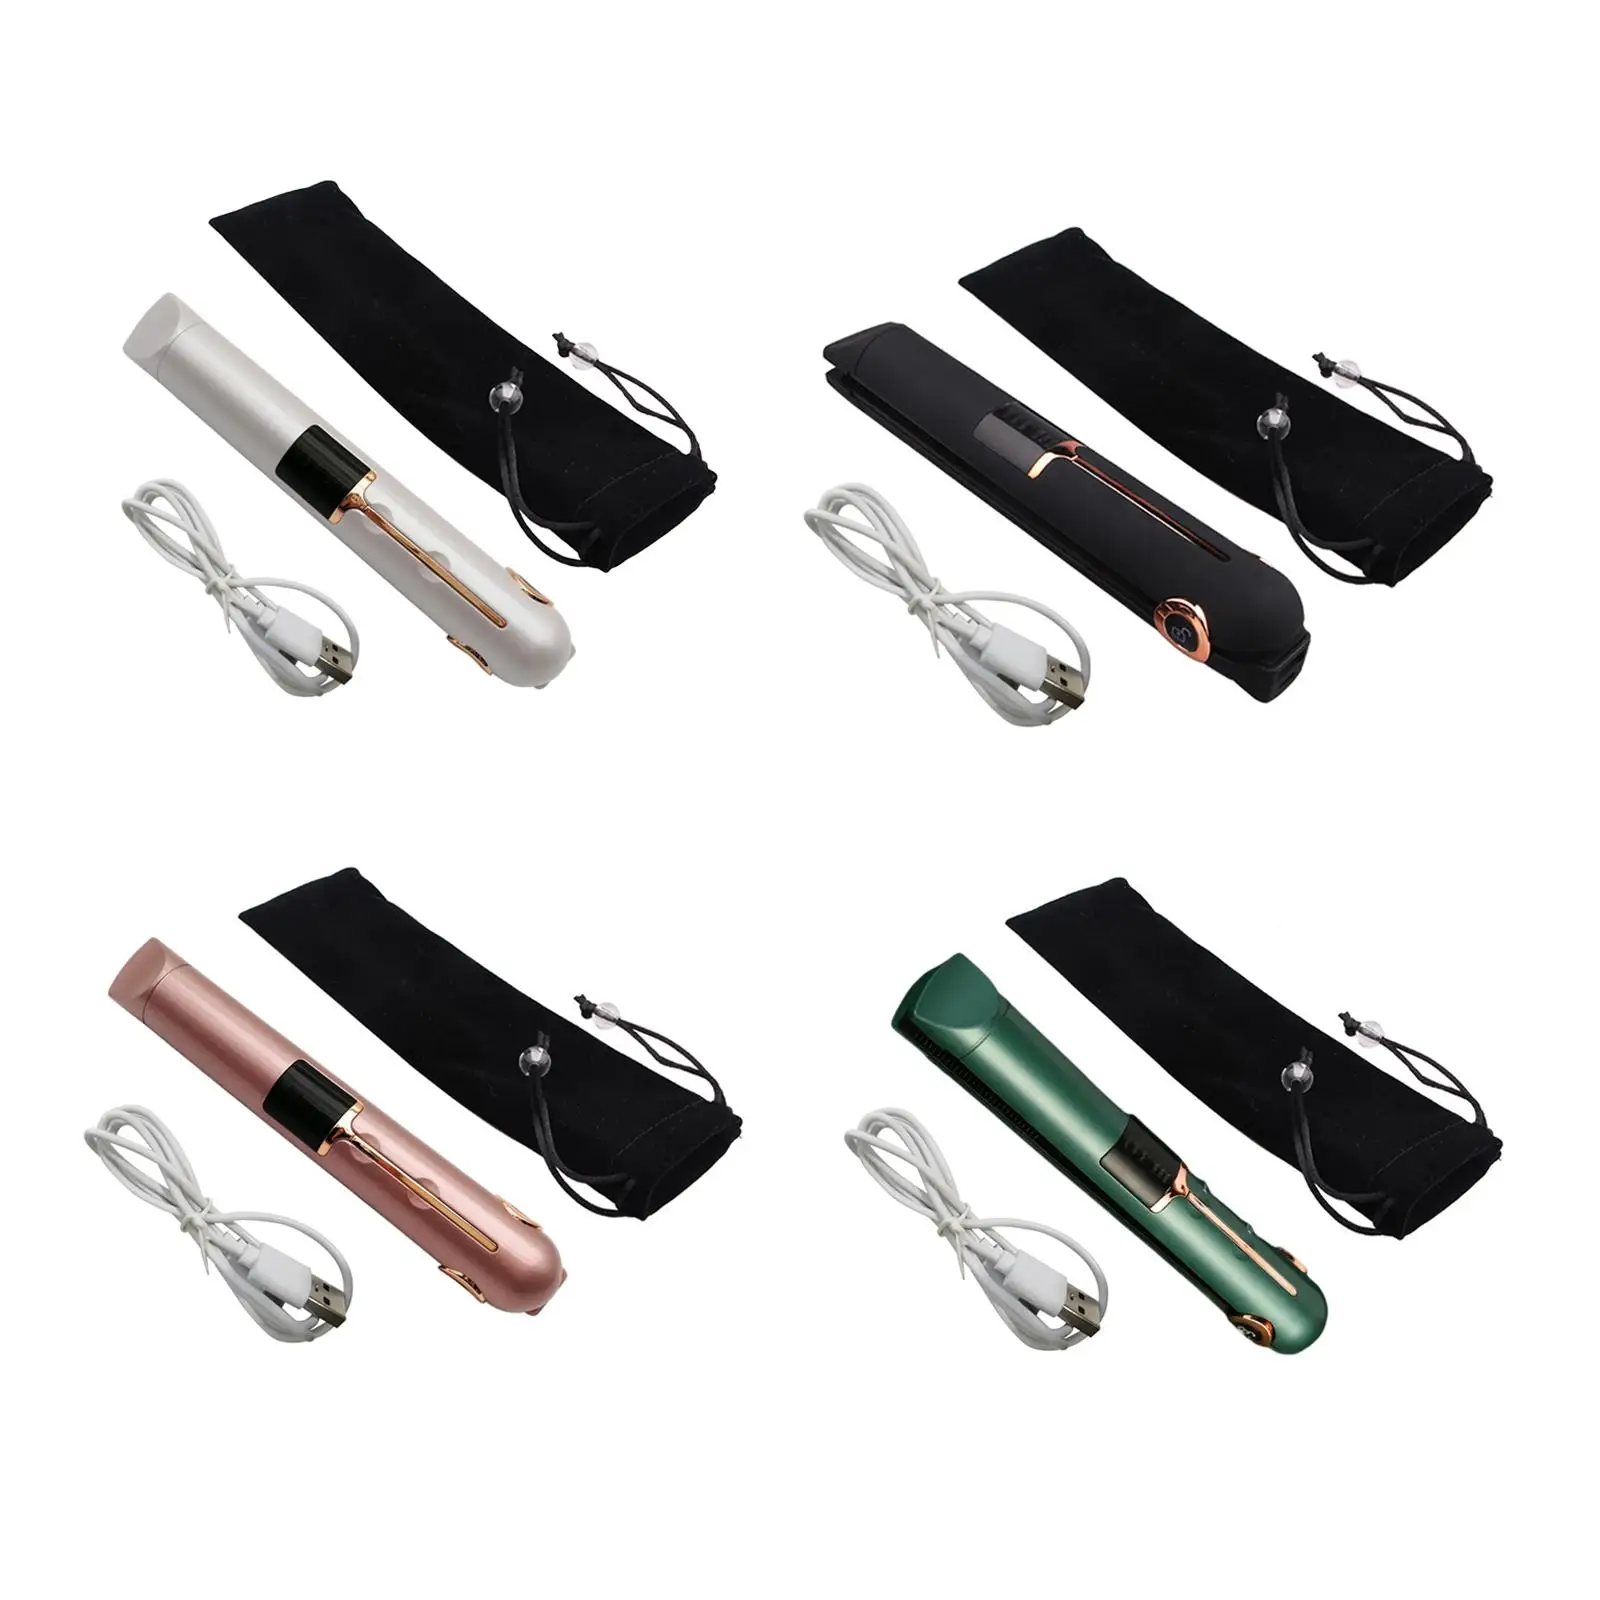 Cordless Hair Curler Straightener 3 Temp USB Charging ABS Styling Tools for Salon Hair Straightening Hair Styling DIY Women Men